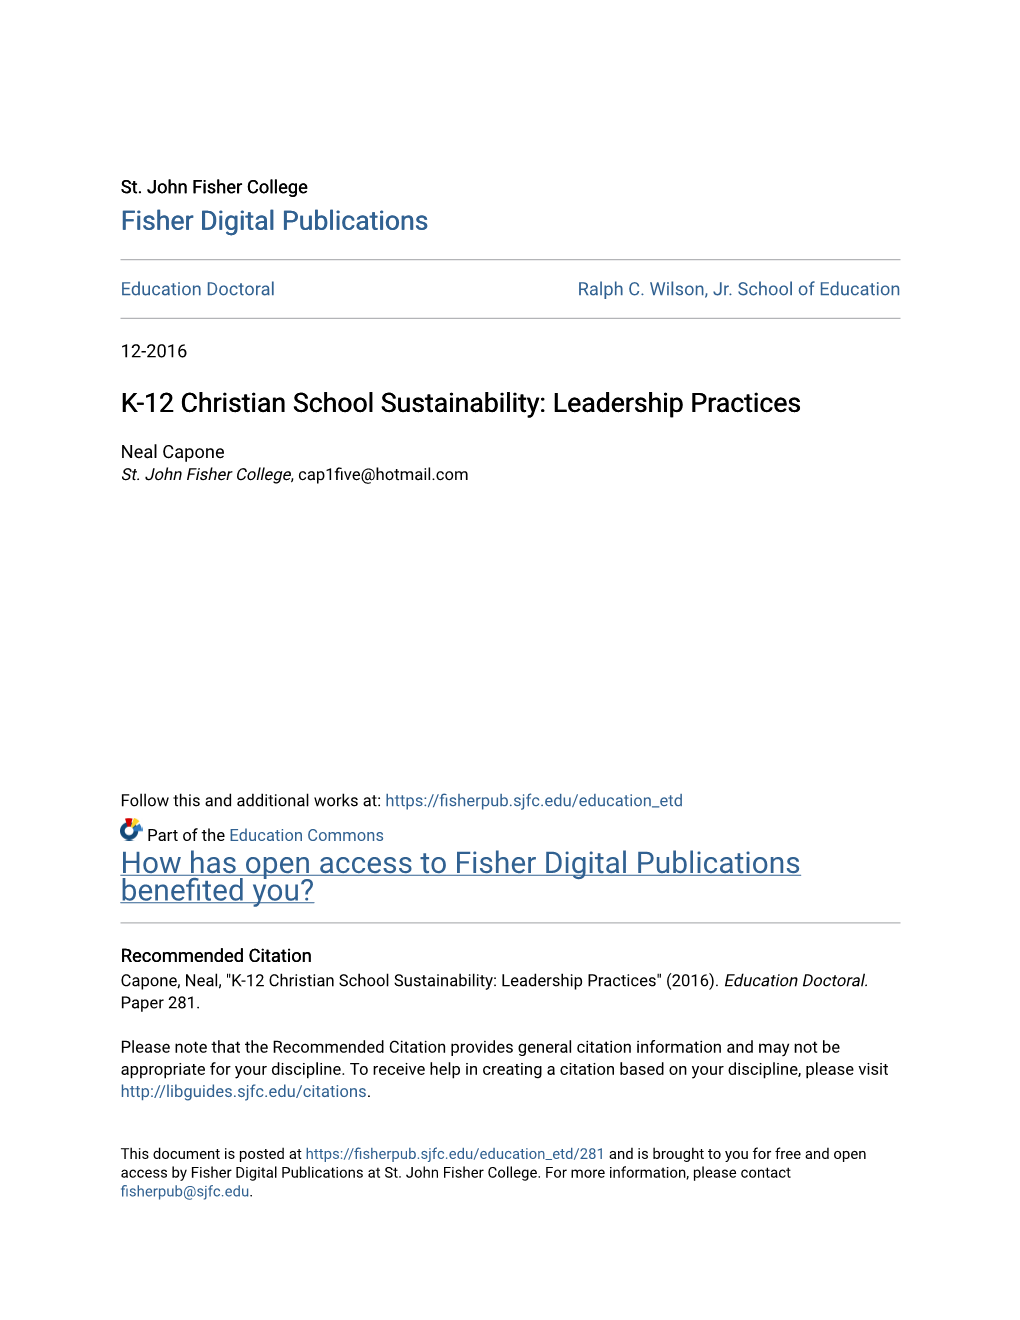 K-12 Christian School Sustainability: Leadership Practices